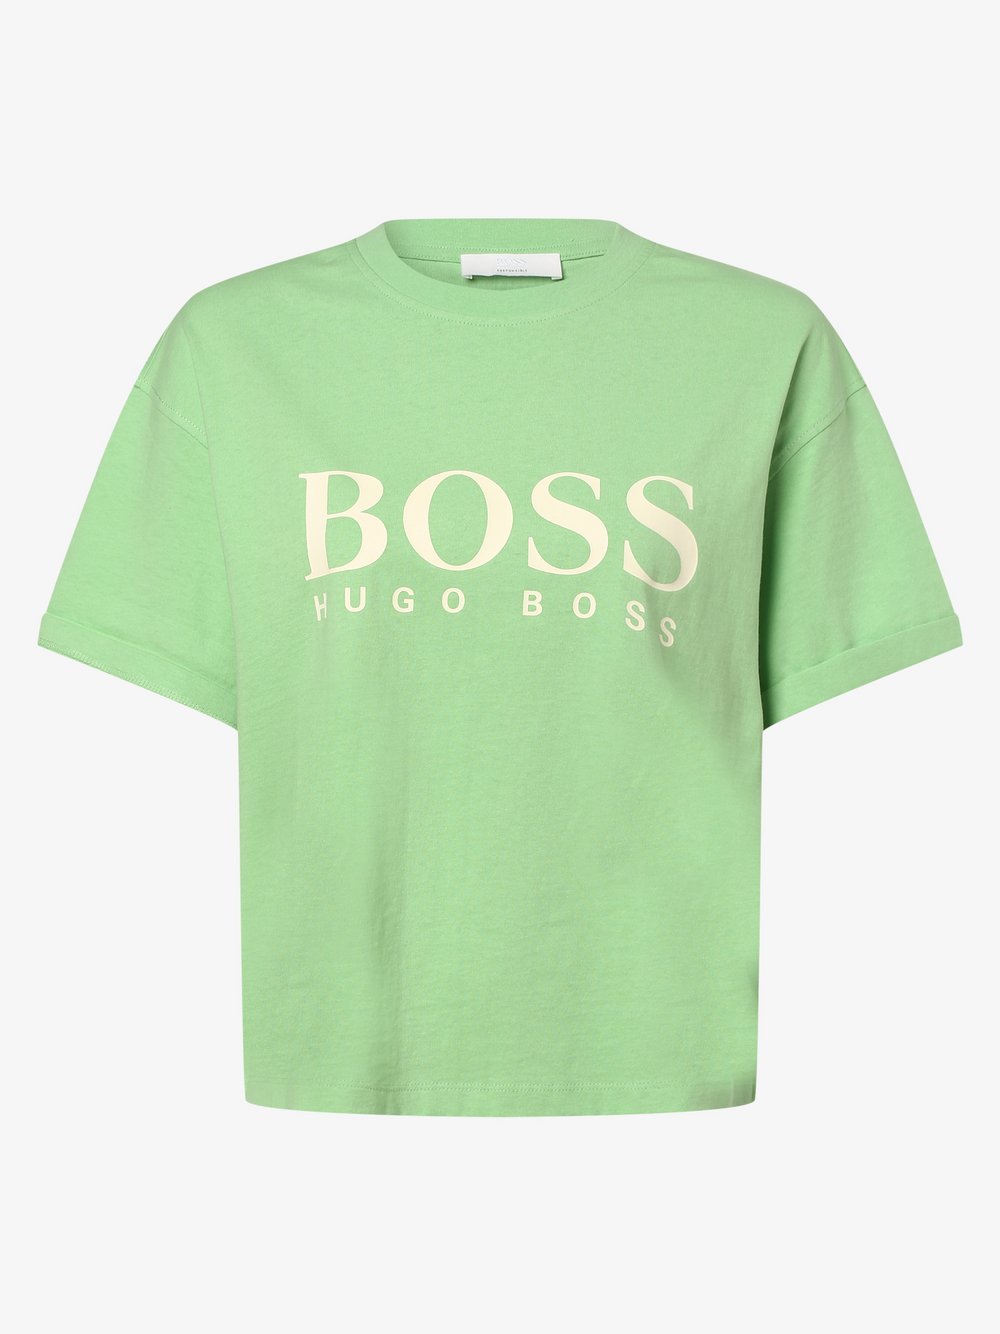 BOSS Casual - T-shirt damski – C_Evina1_Active, zielony